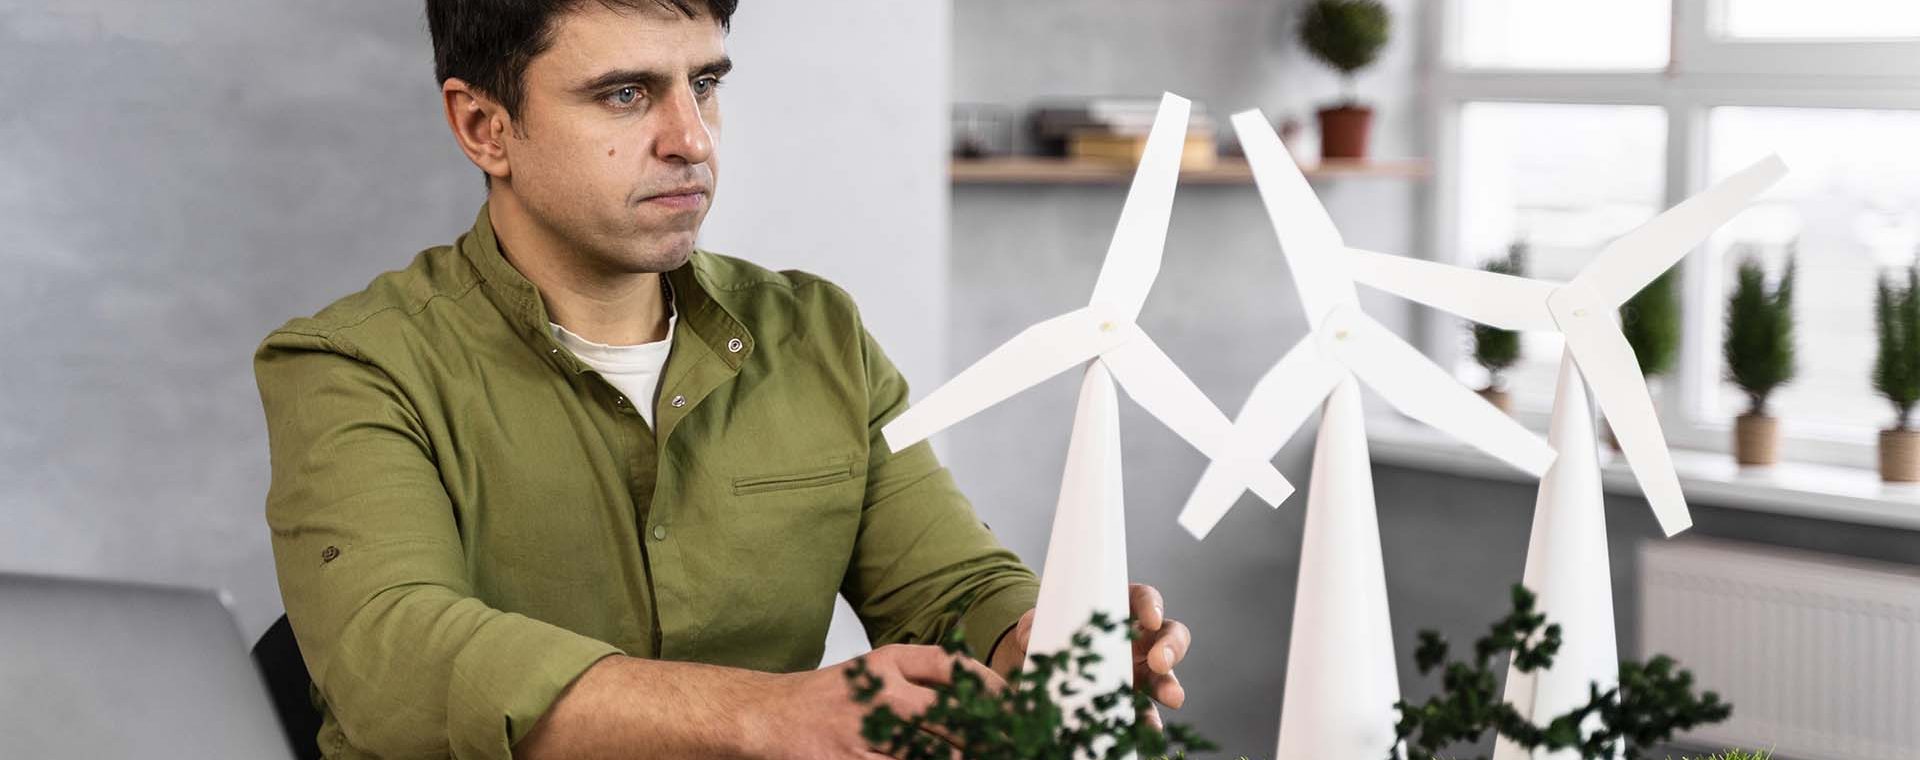 man-working-eco-friendly-wind-power-project-min